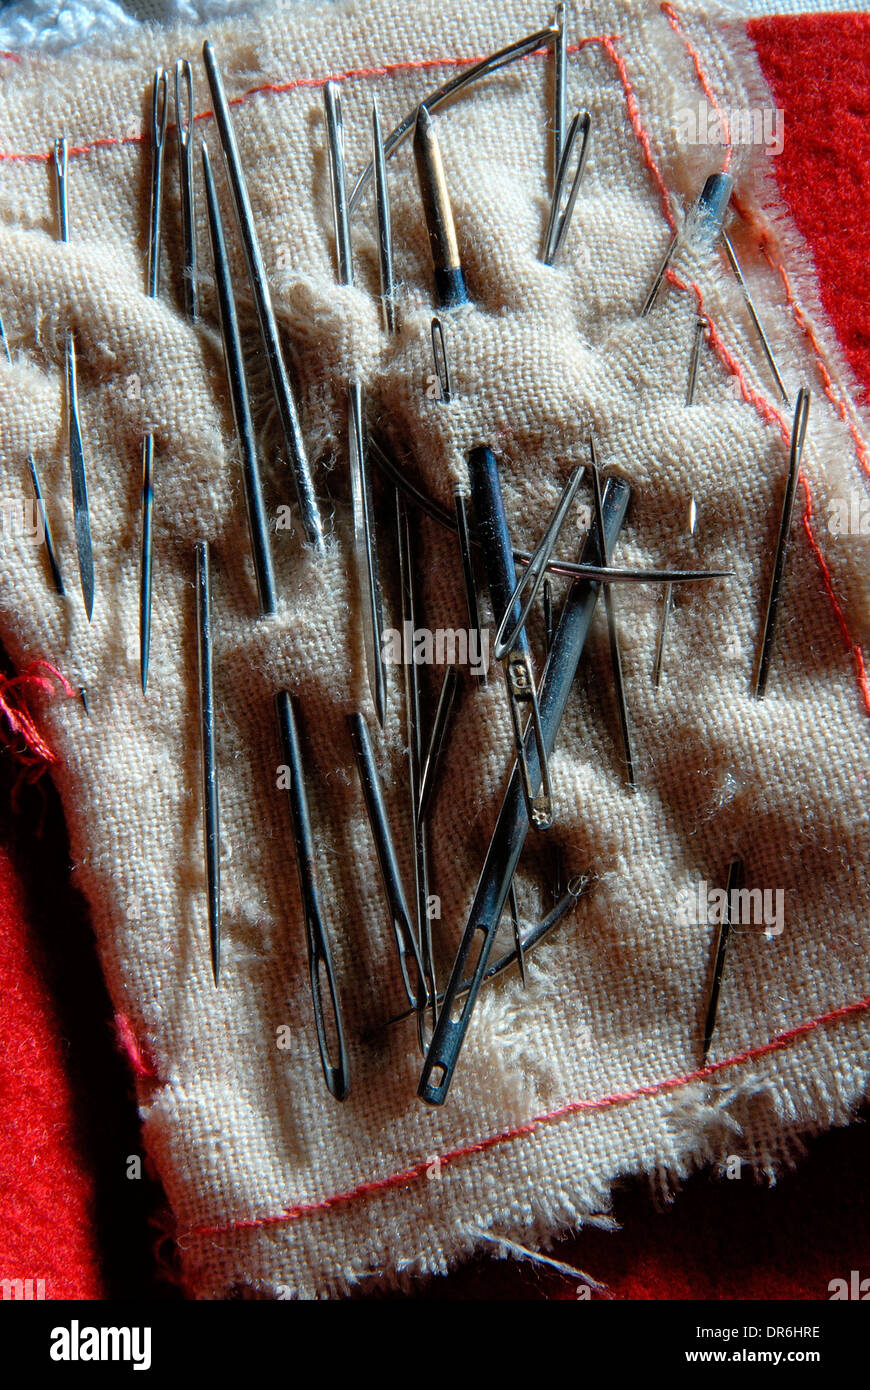 Needles stuck on cloth Stock Photo